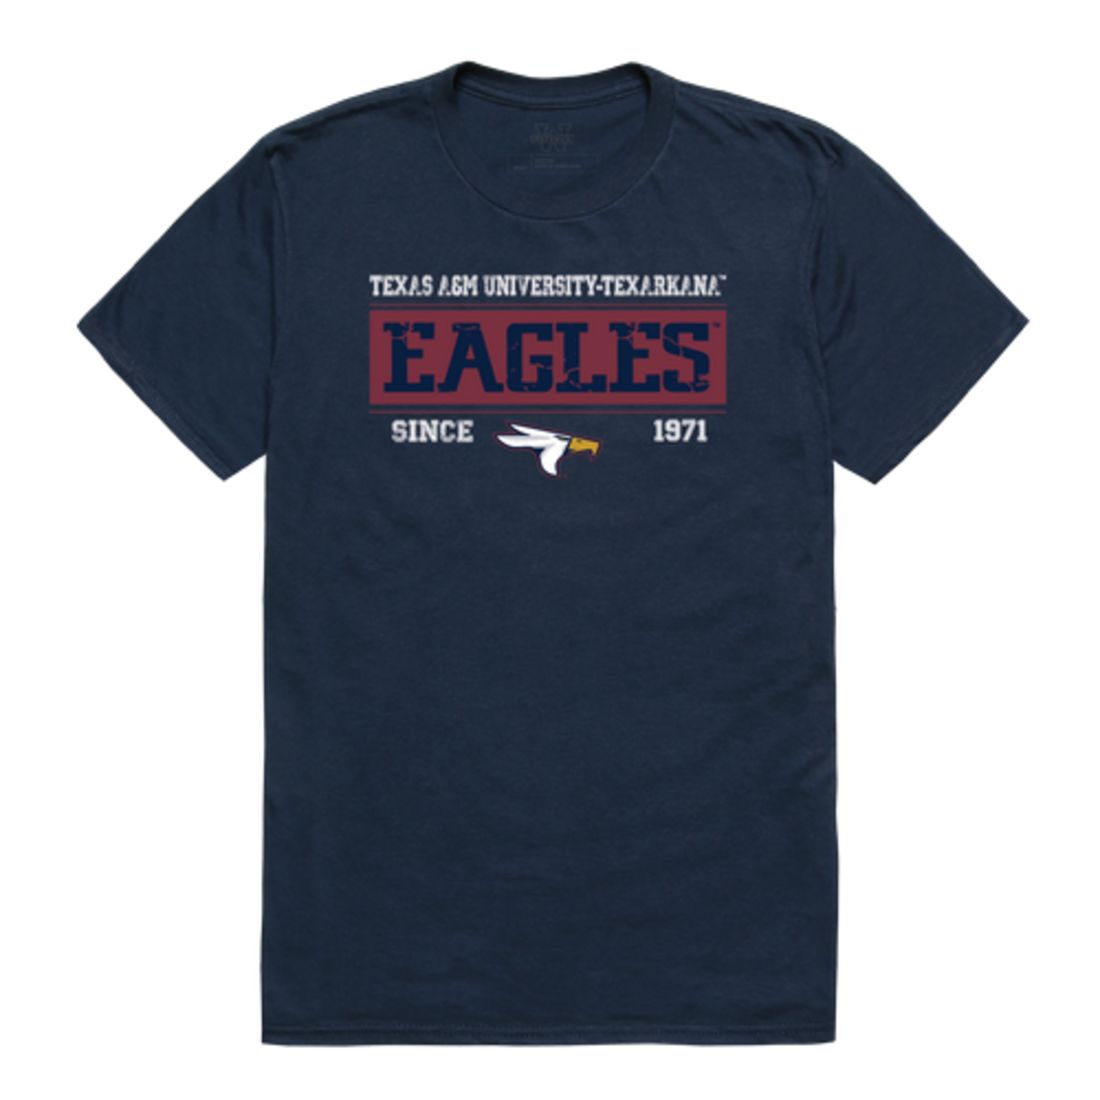 Texas A&M University-Texarkana Eagles Established T-Shirt Tee